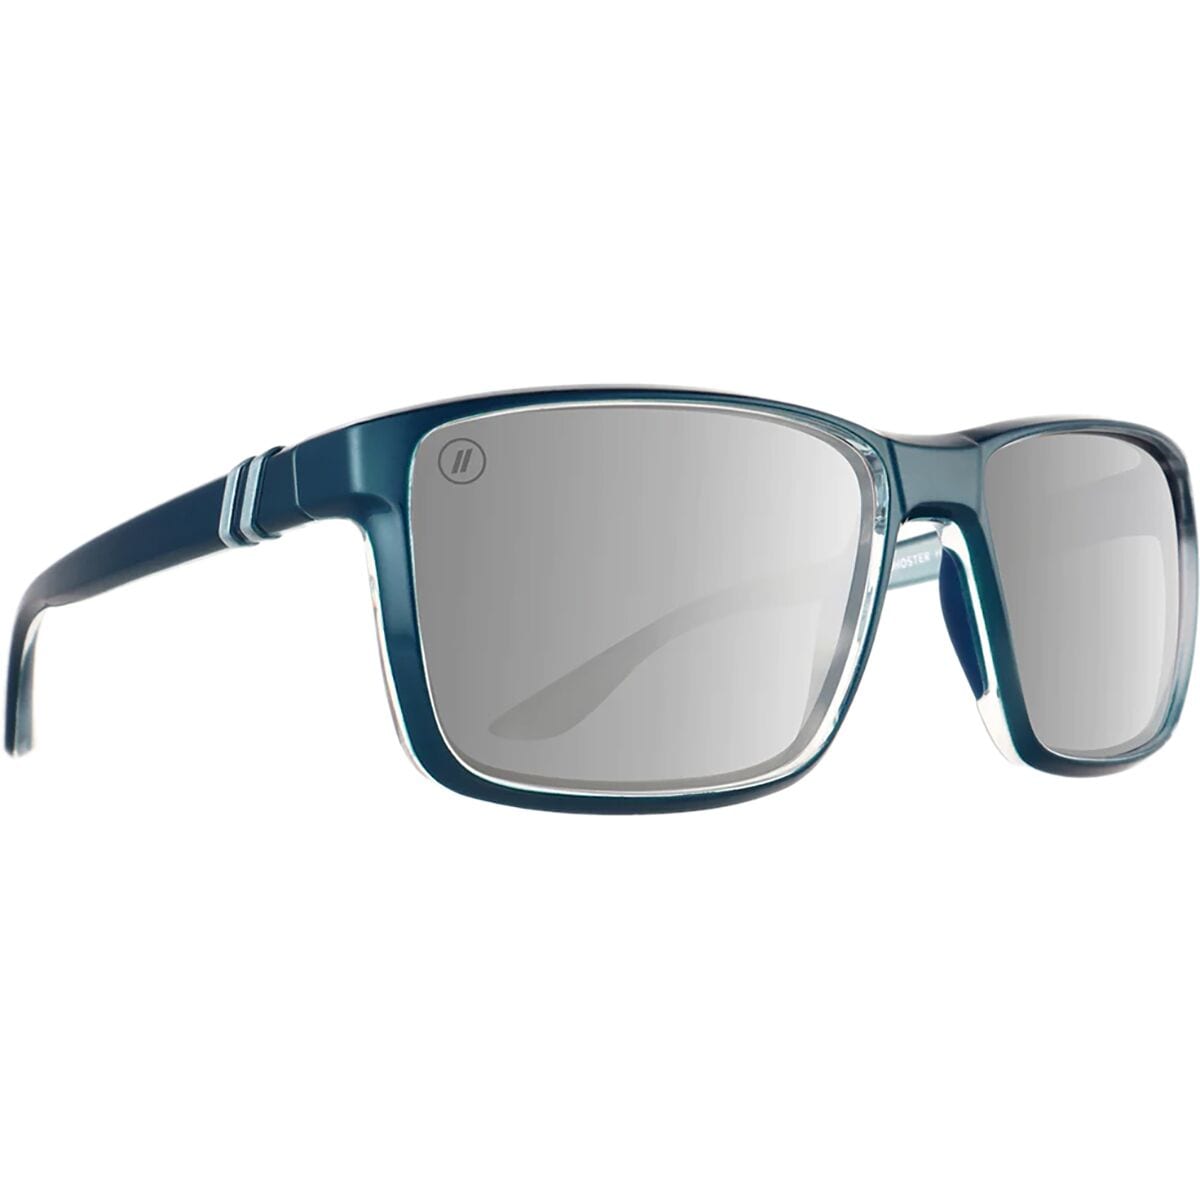 Blenders Eyewear Mesa Polarized Sunglasses